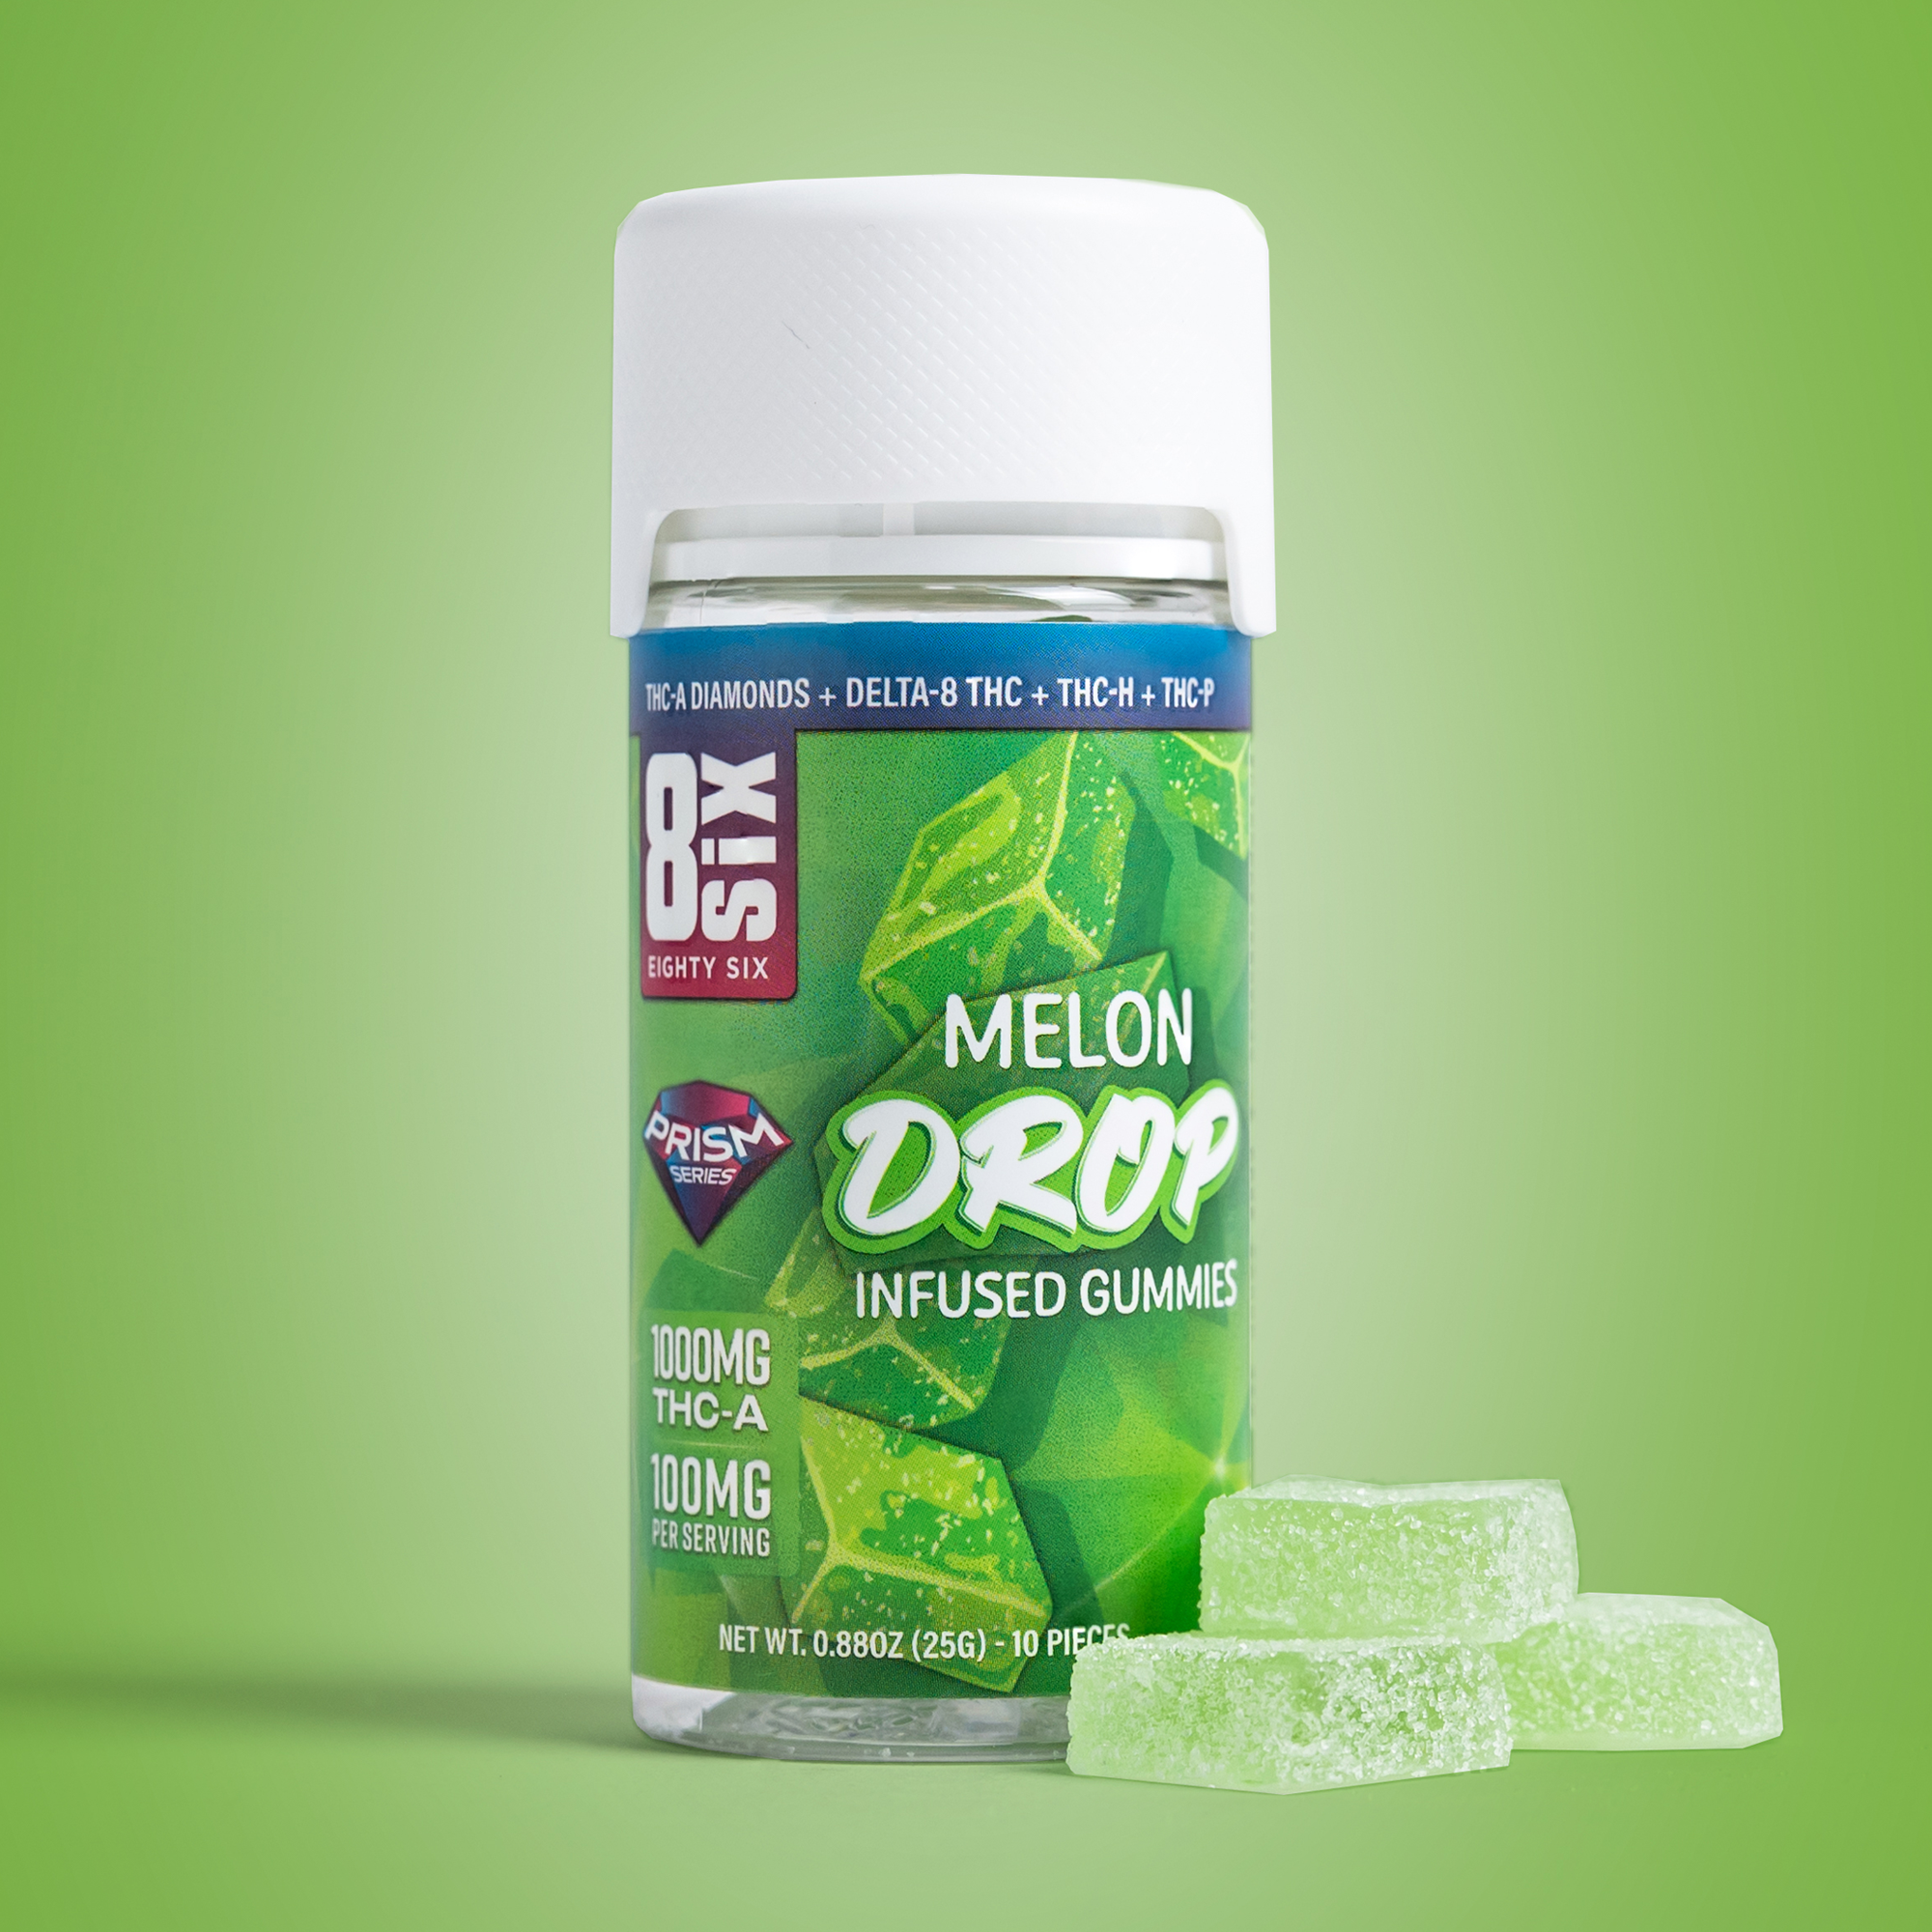 Eighty Six Melon Drop 1000MG THC-A Gummies Best Price